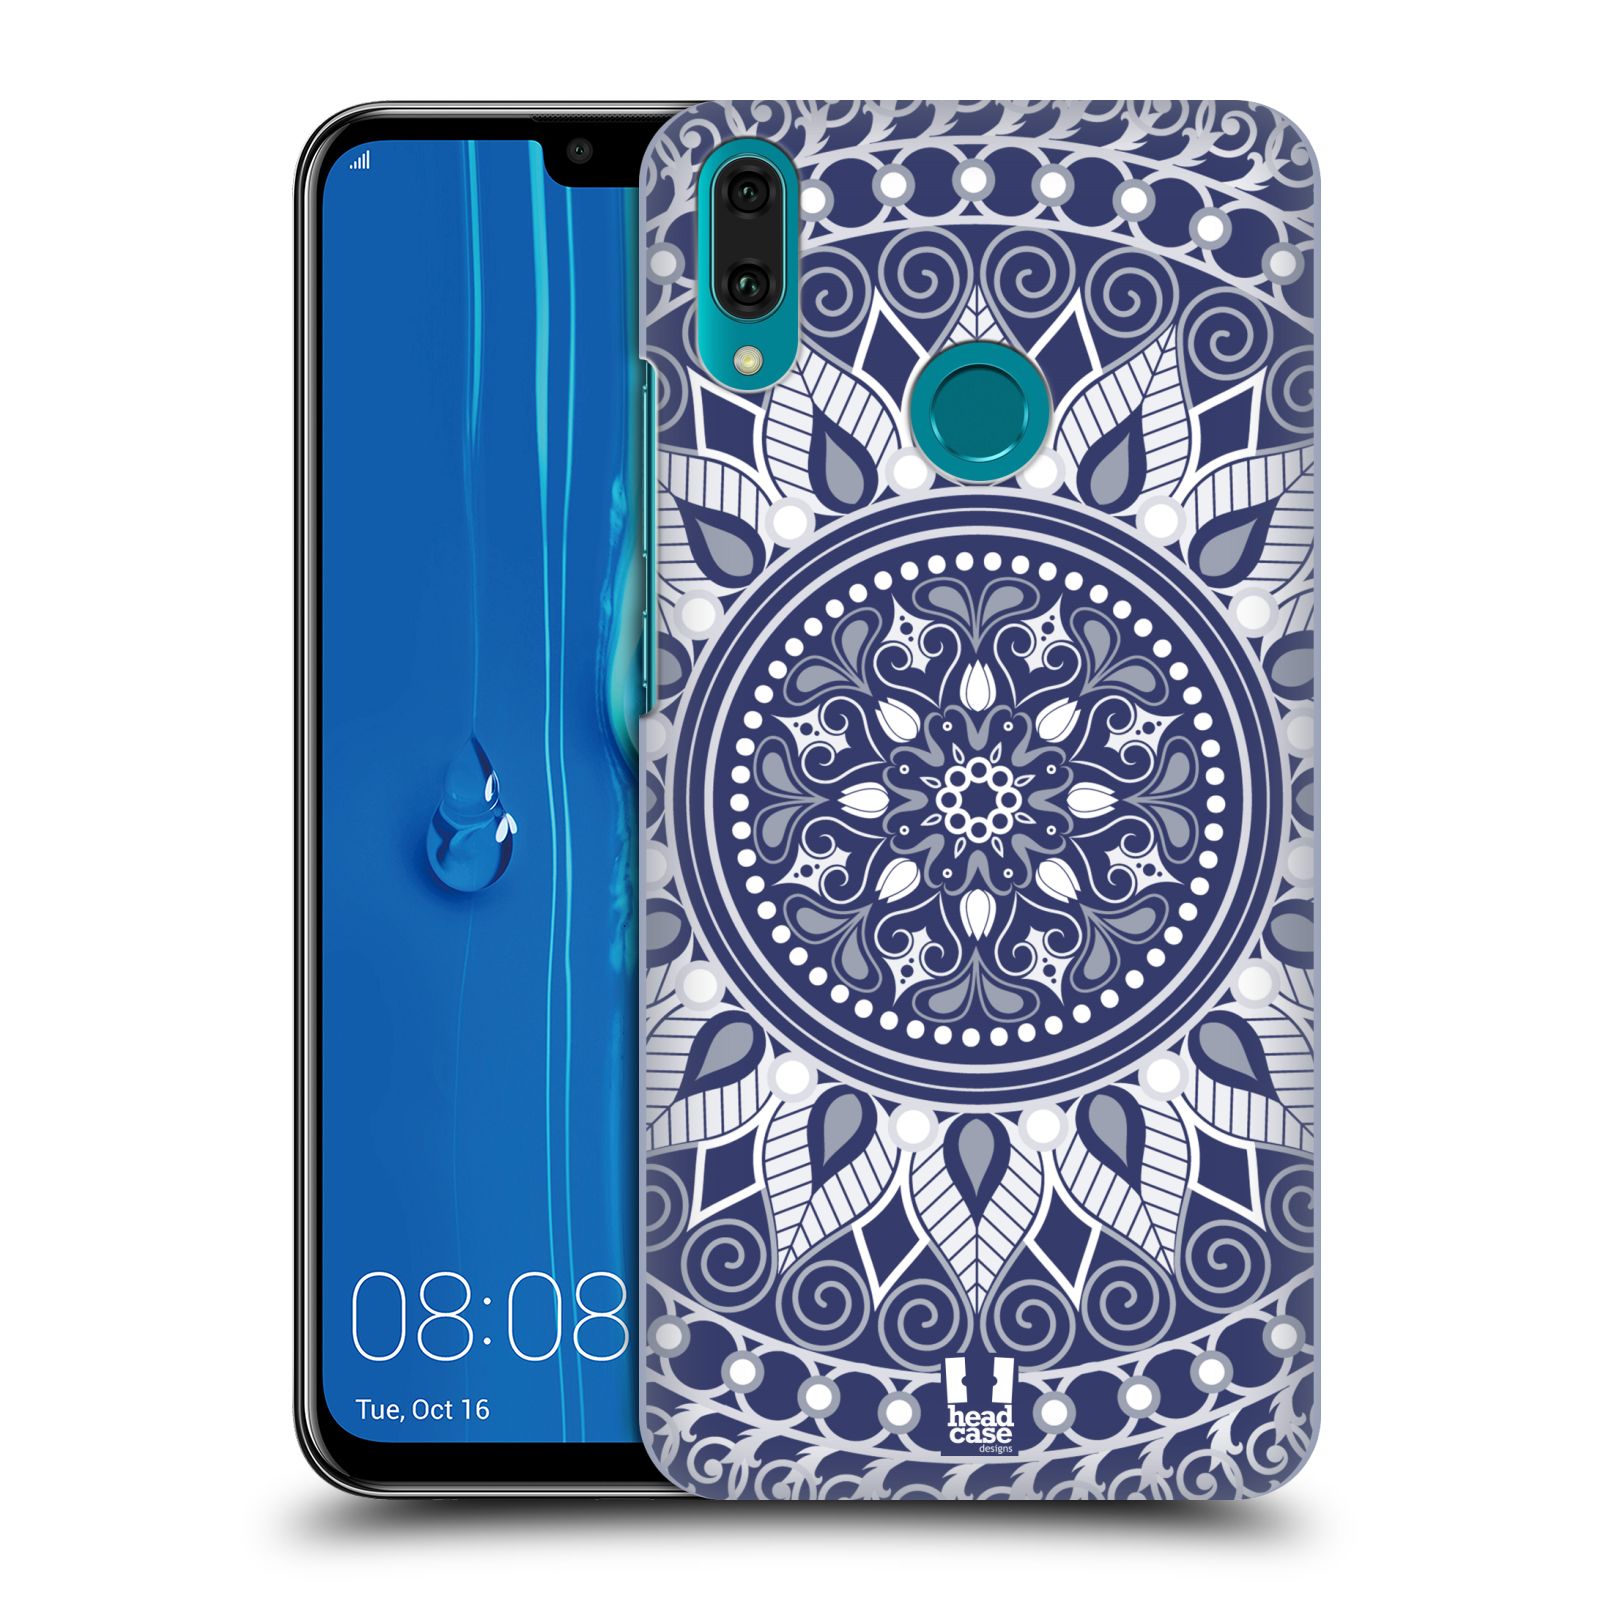 Pouzdro na mobil Huawei Y9 2019 - HEAD CASE - vzor Indie Mandala slunce barevný motiv MODRÁ